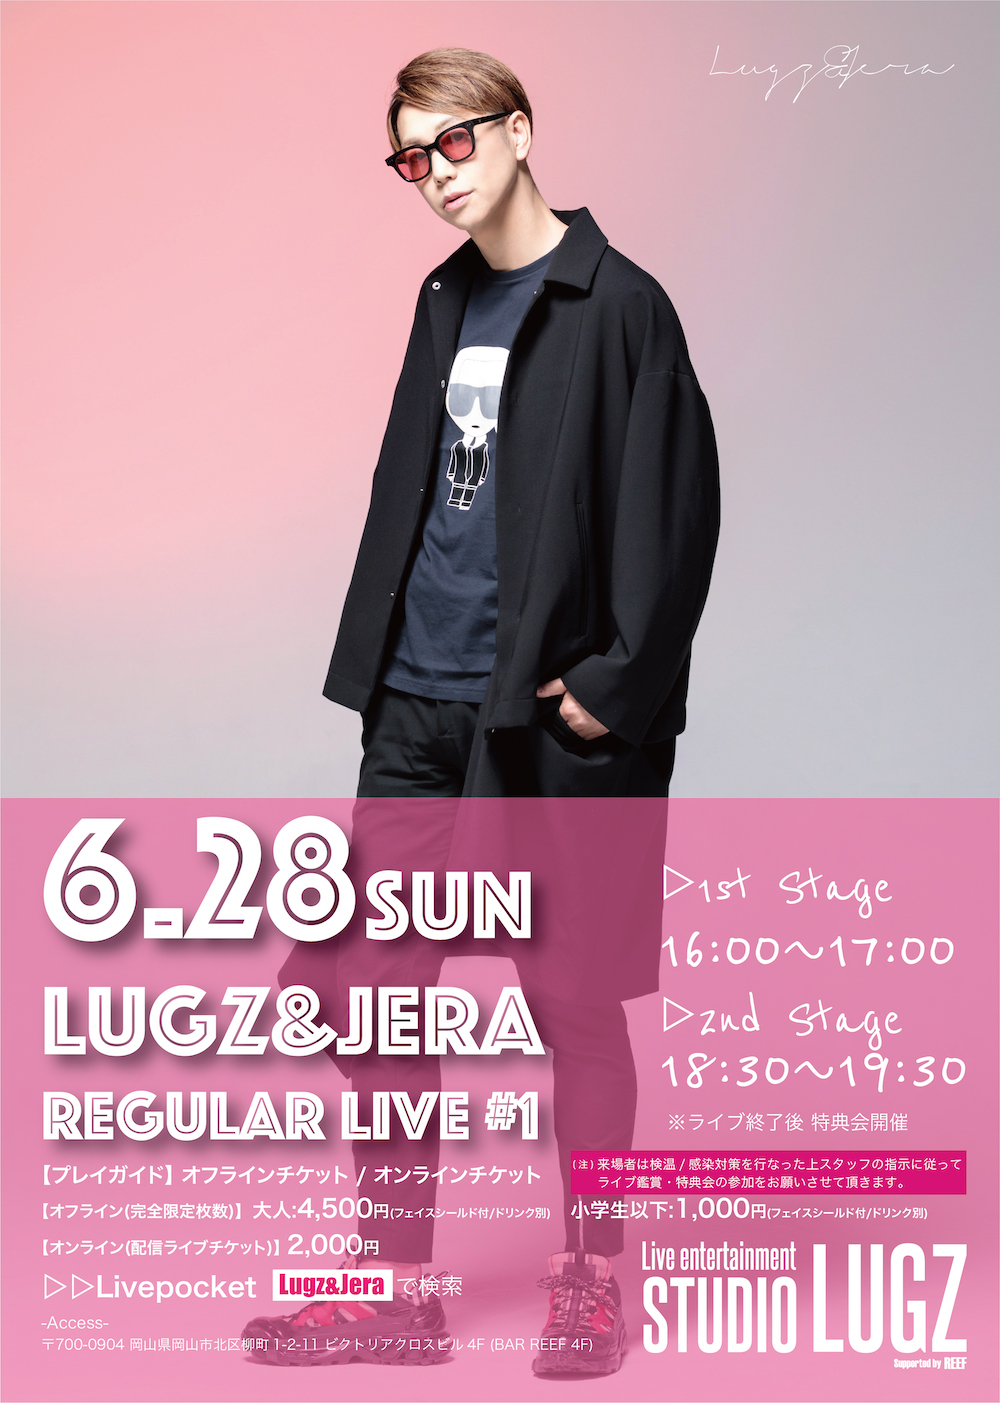 Lugz&Jera Regular LIVE in STUDIO LUGZ  #1